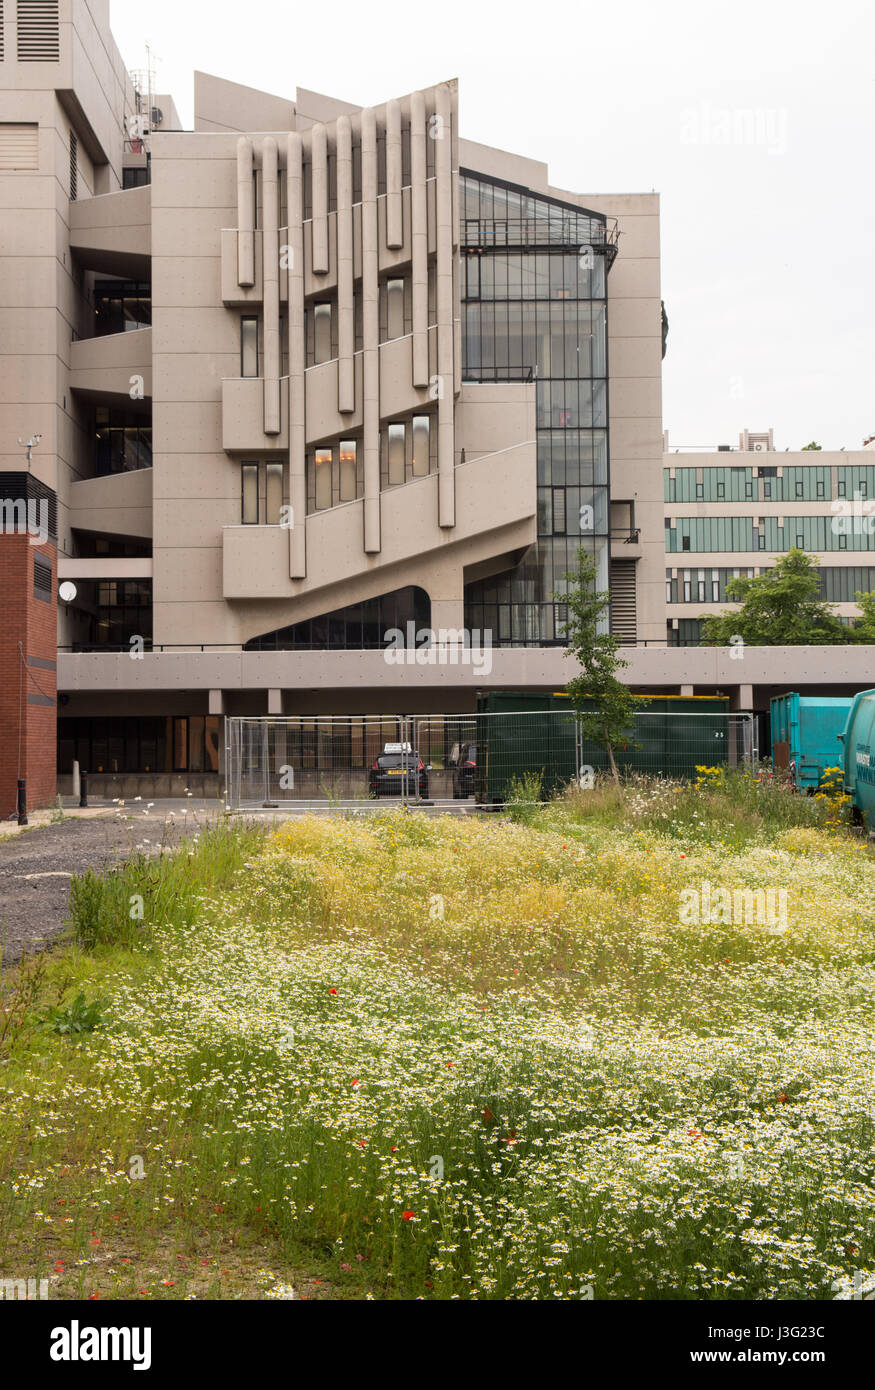 Leeds, England, UK - June 29, 2015: 20th century brutalist concrete buildings at the University of Leeds. Stock Photo